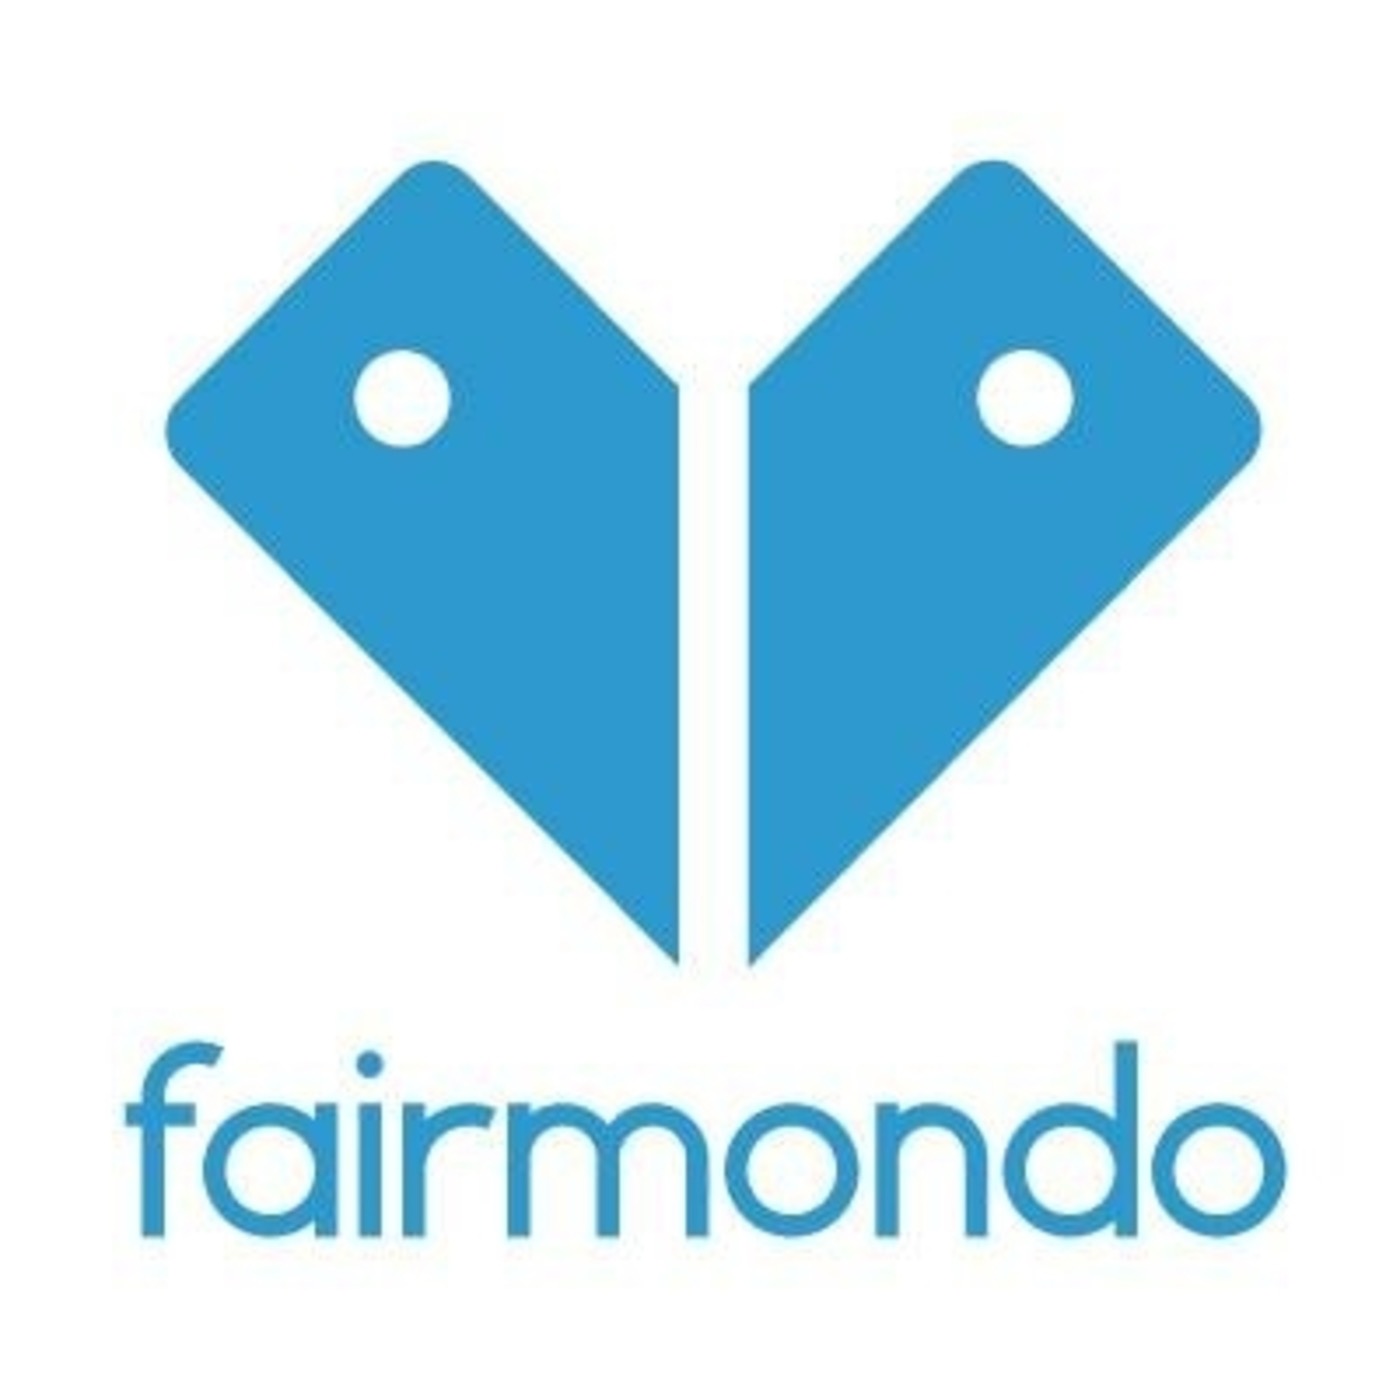 [19] Fairmondo: Cooperatively Owned Online Marketplace